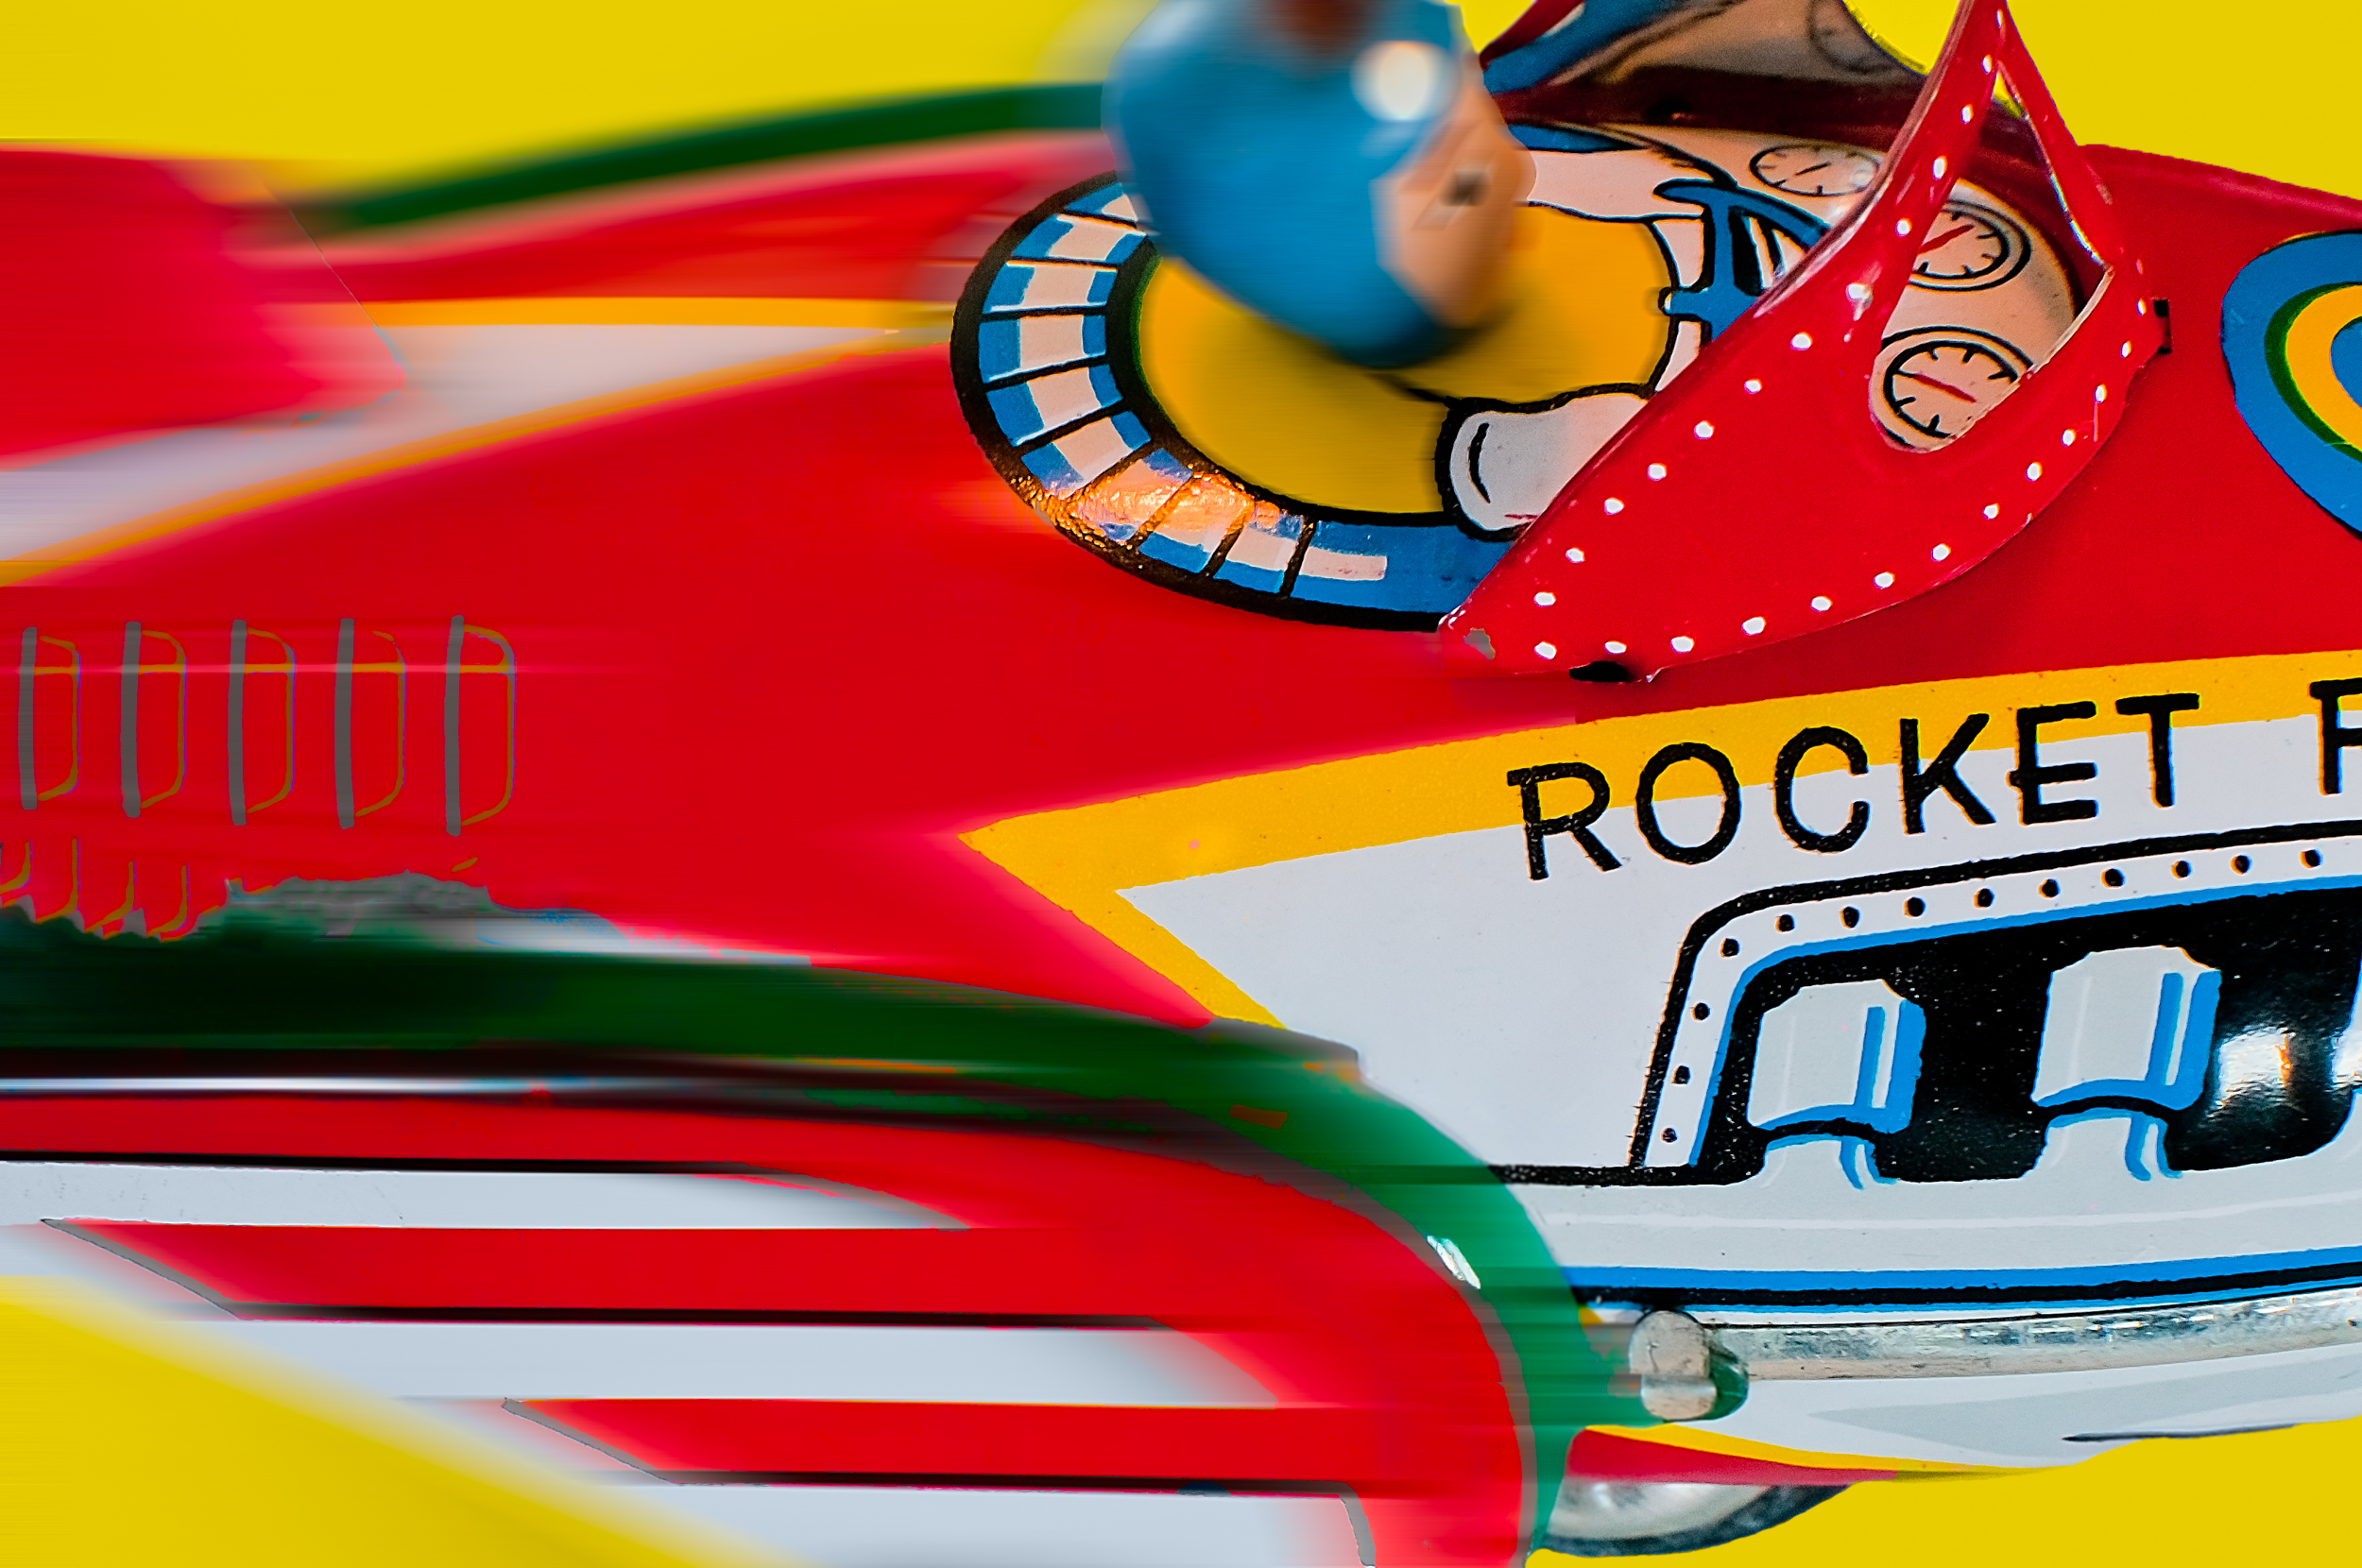  the rocket racer, 2014. 